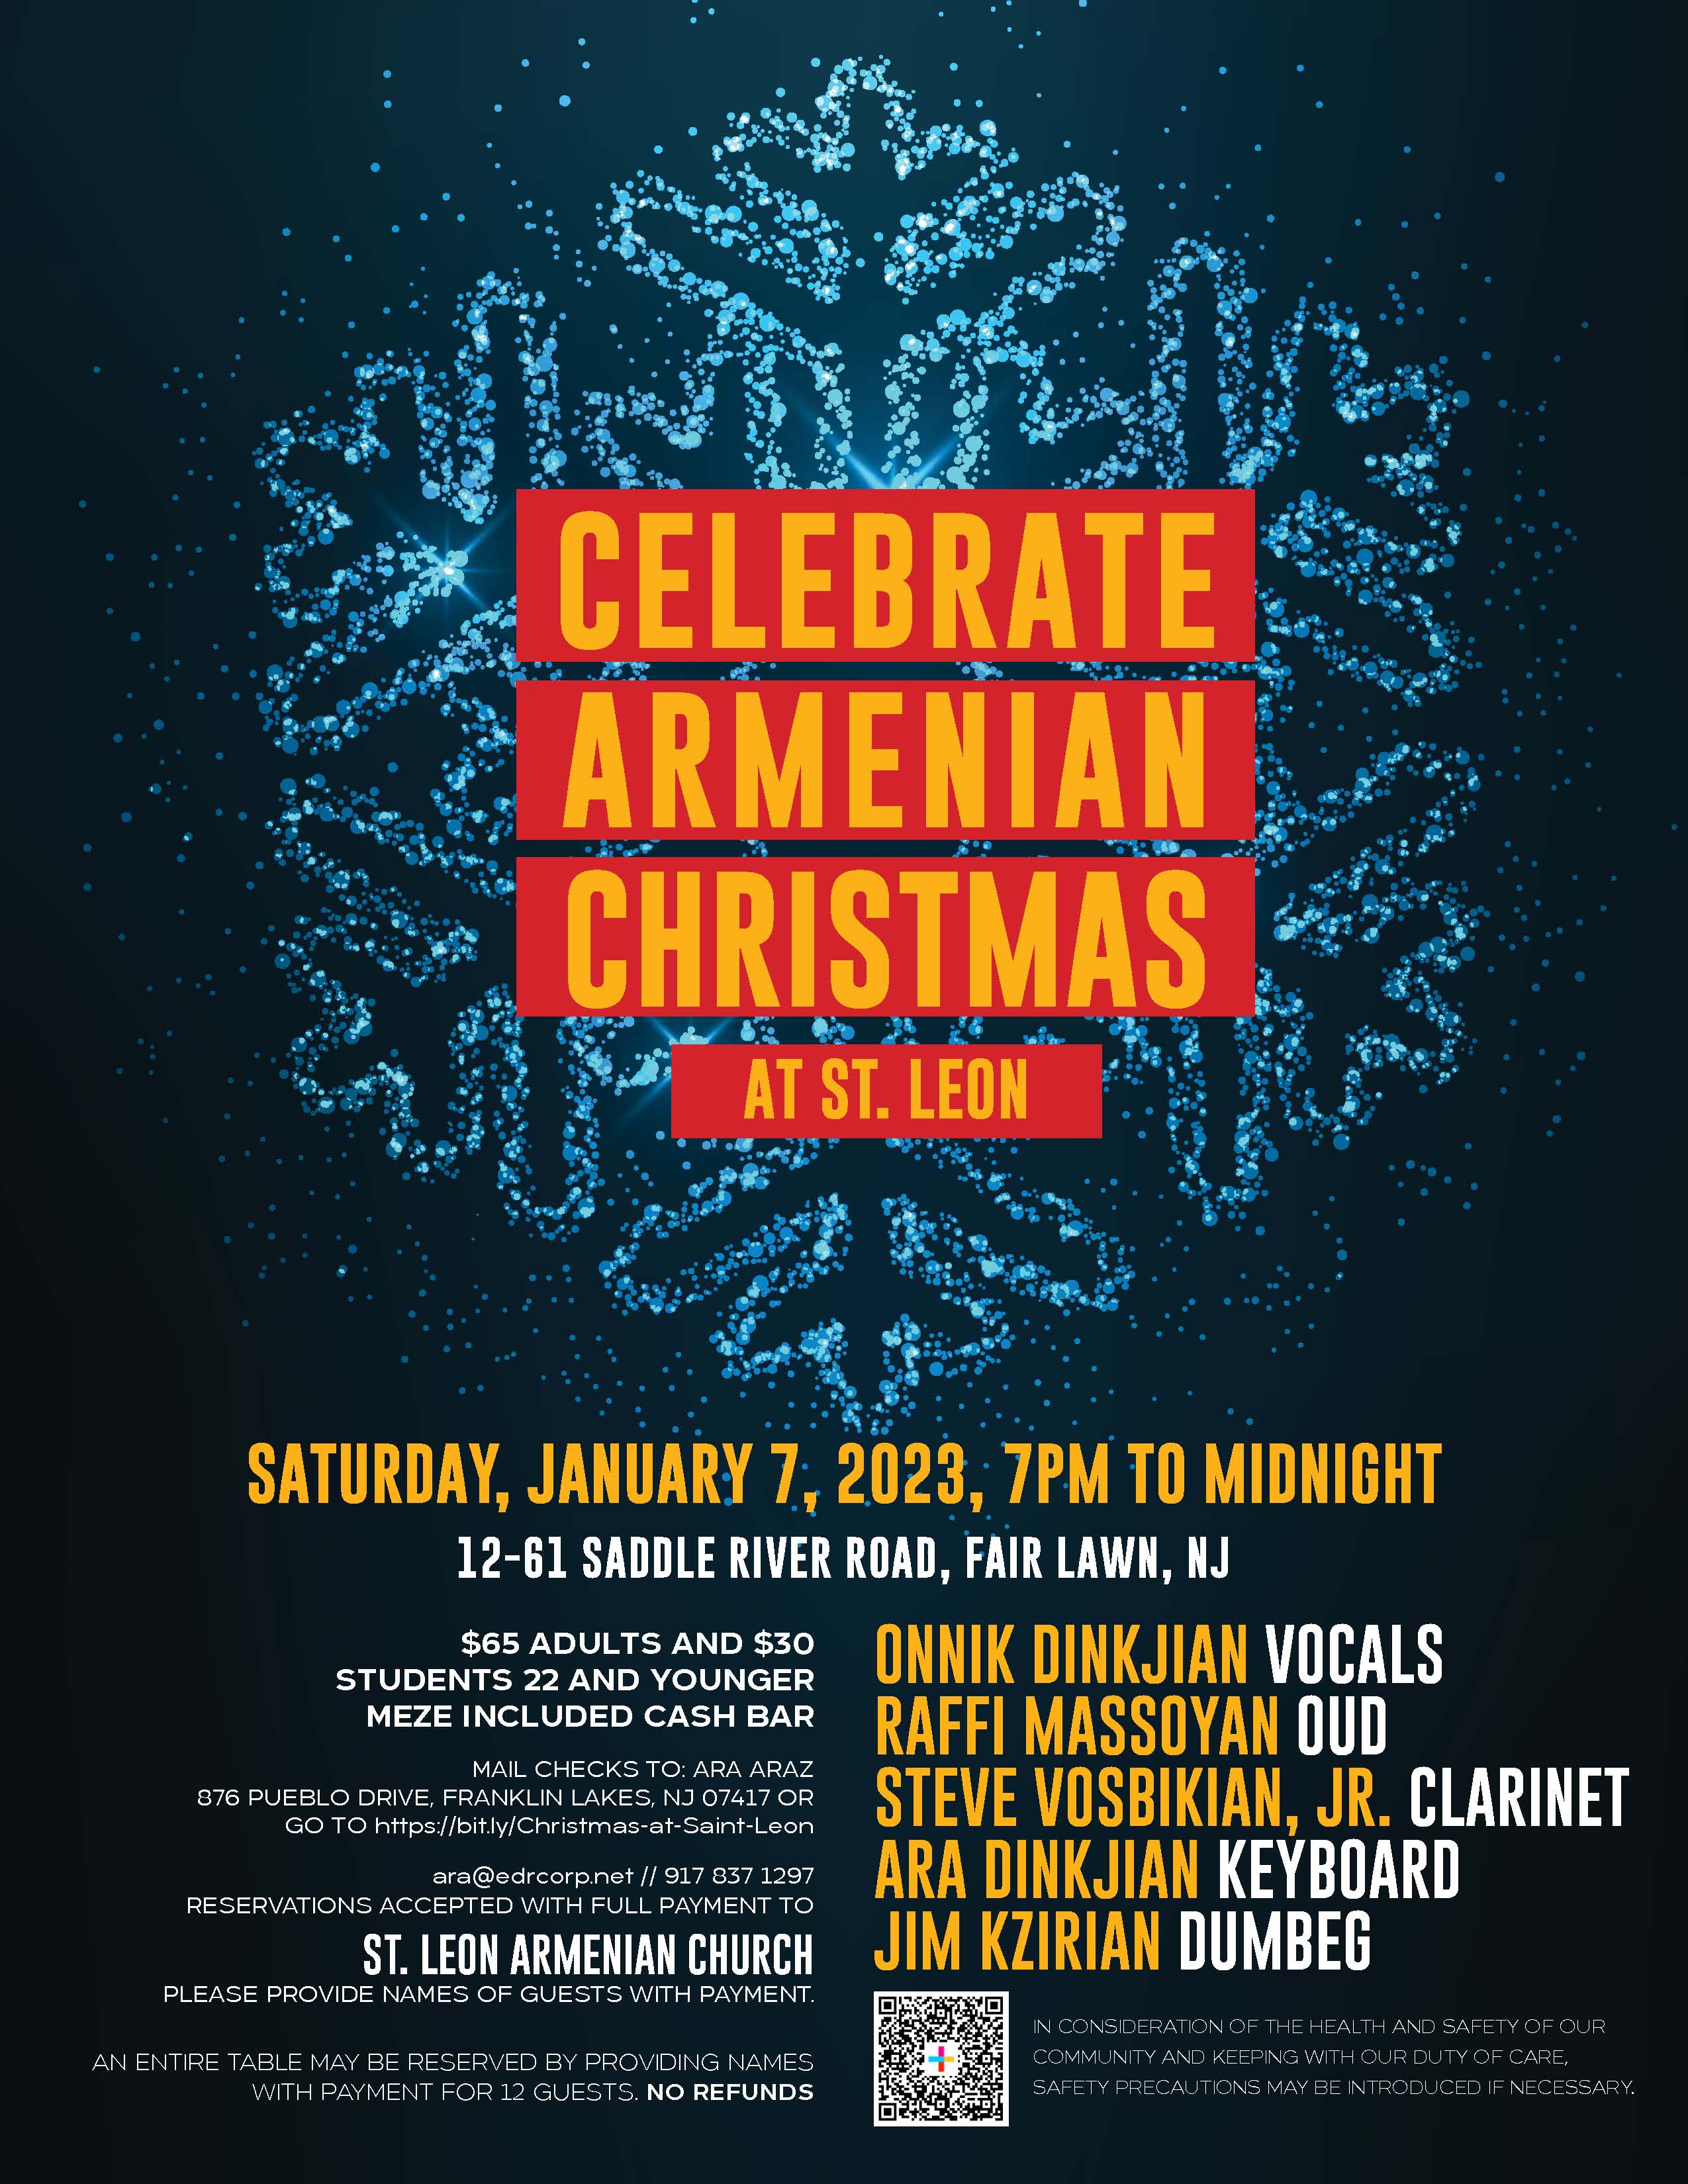 CELEBRATE ARMENIAN CHRISTMAS with ONNIK DINKJIAN